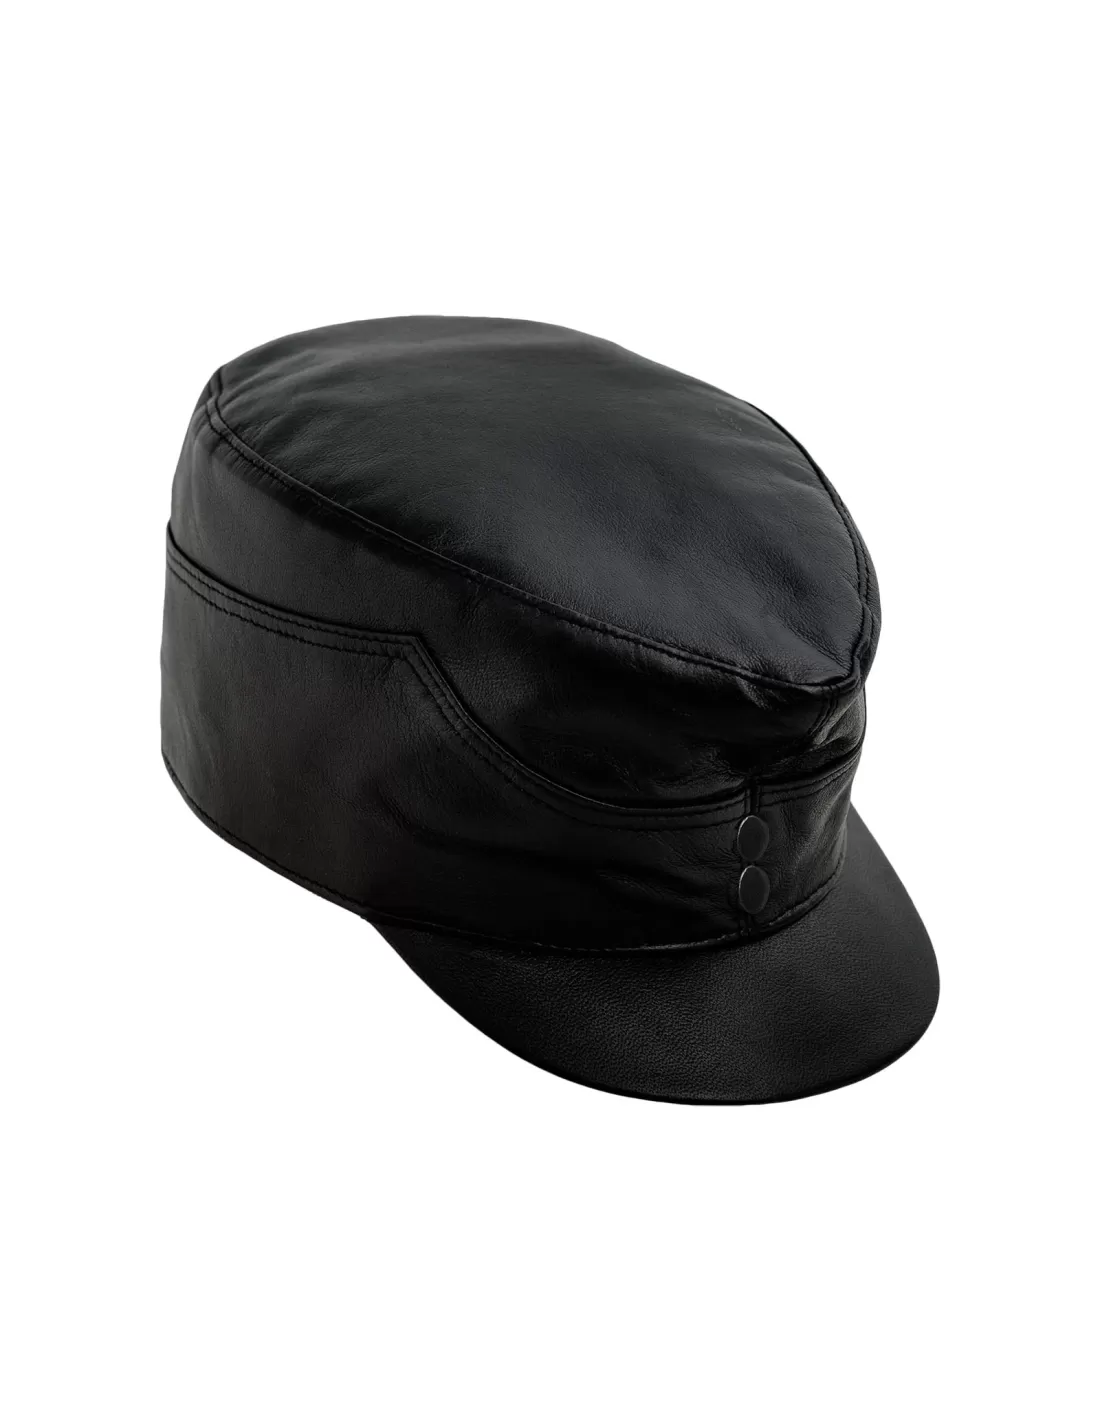 The Good Soldier Schweik (Švejk) - Genuine leather mens black caps